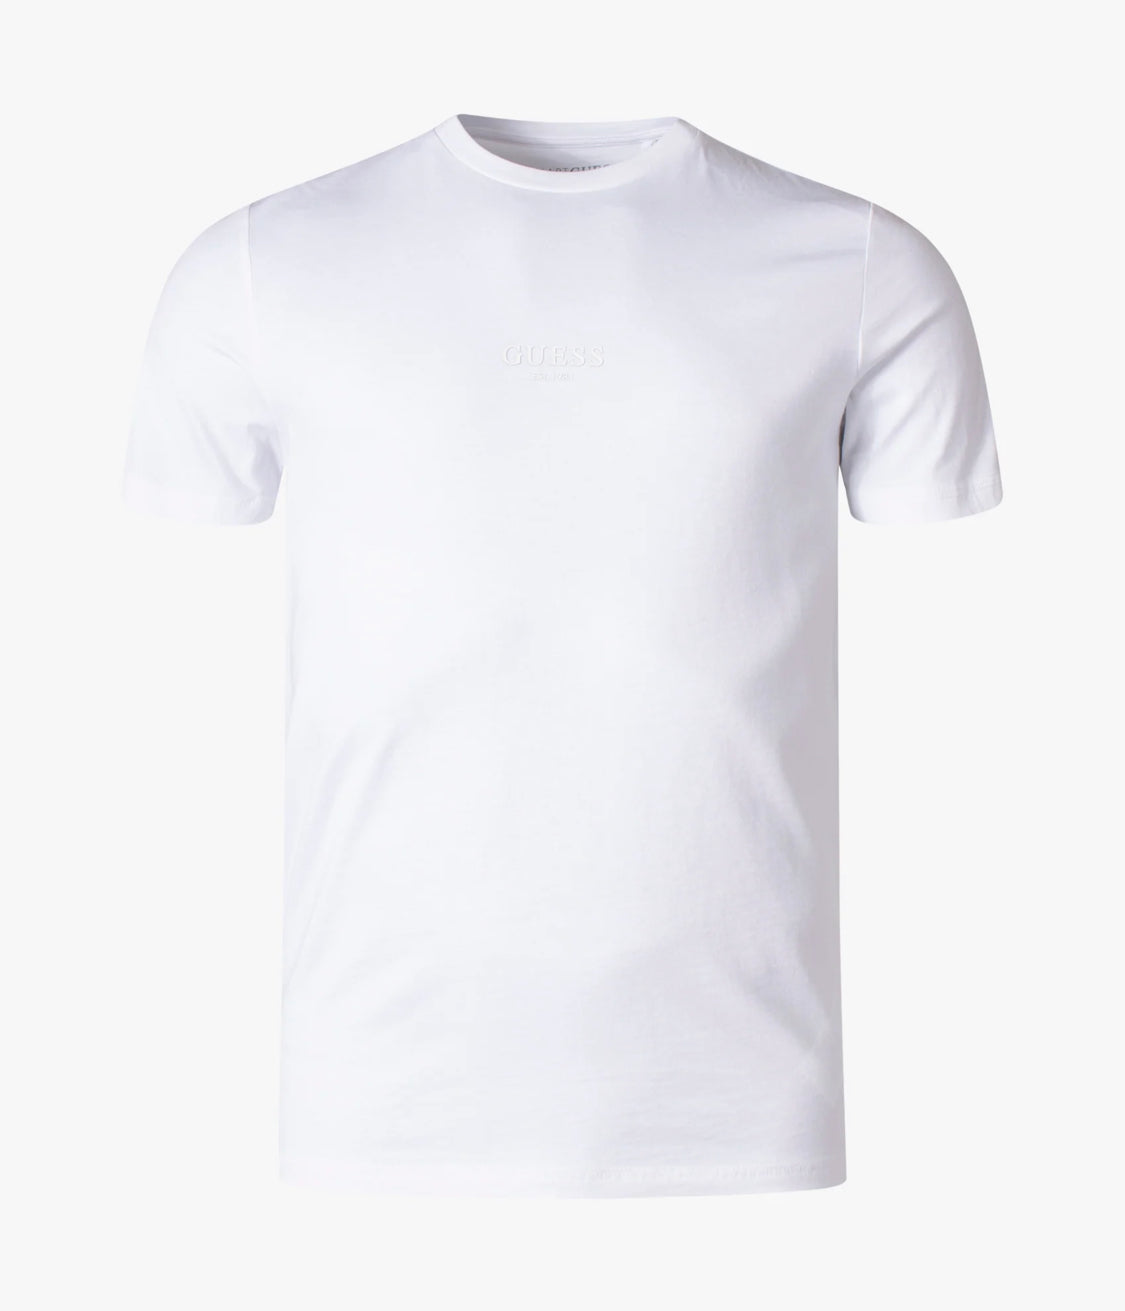 Guess Small Logo T-Shirt White